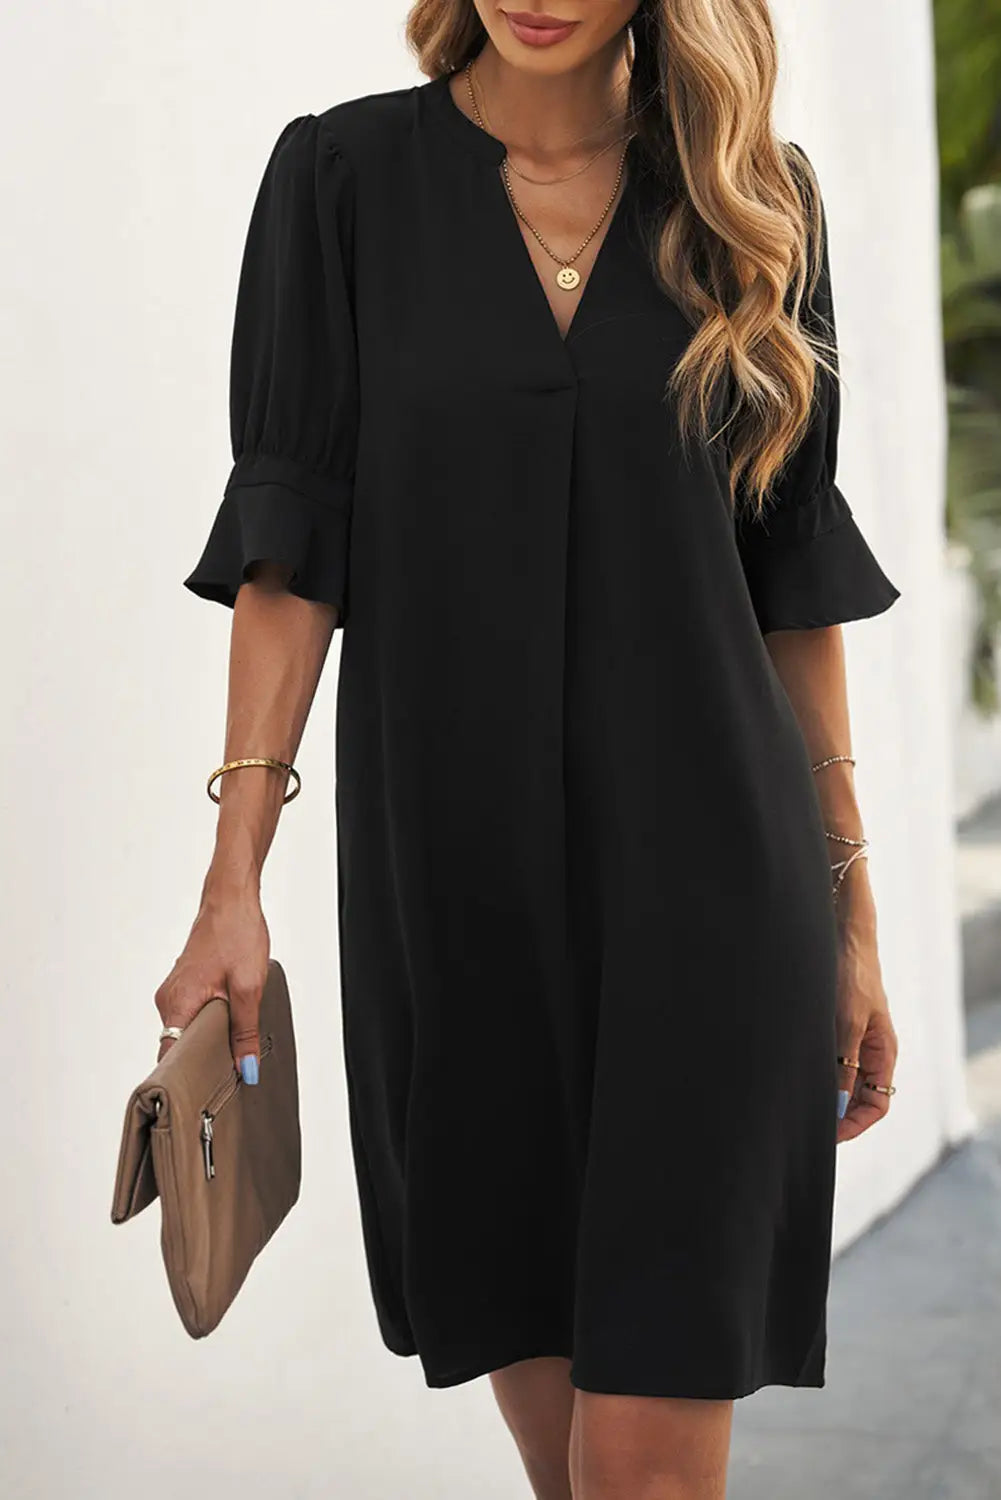 Black ruffled sleeve shift dress - s 95% polyester + 5% spandex mini dresses